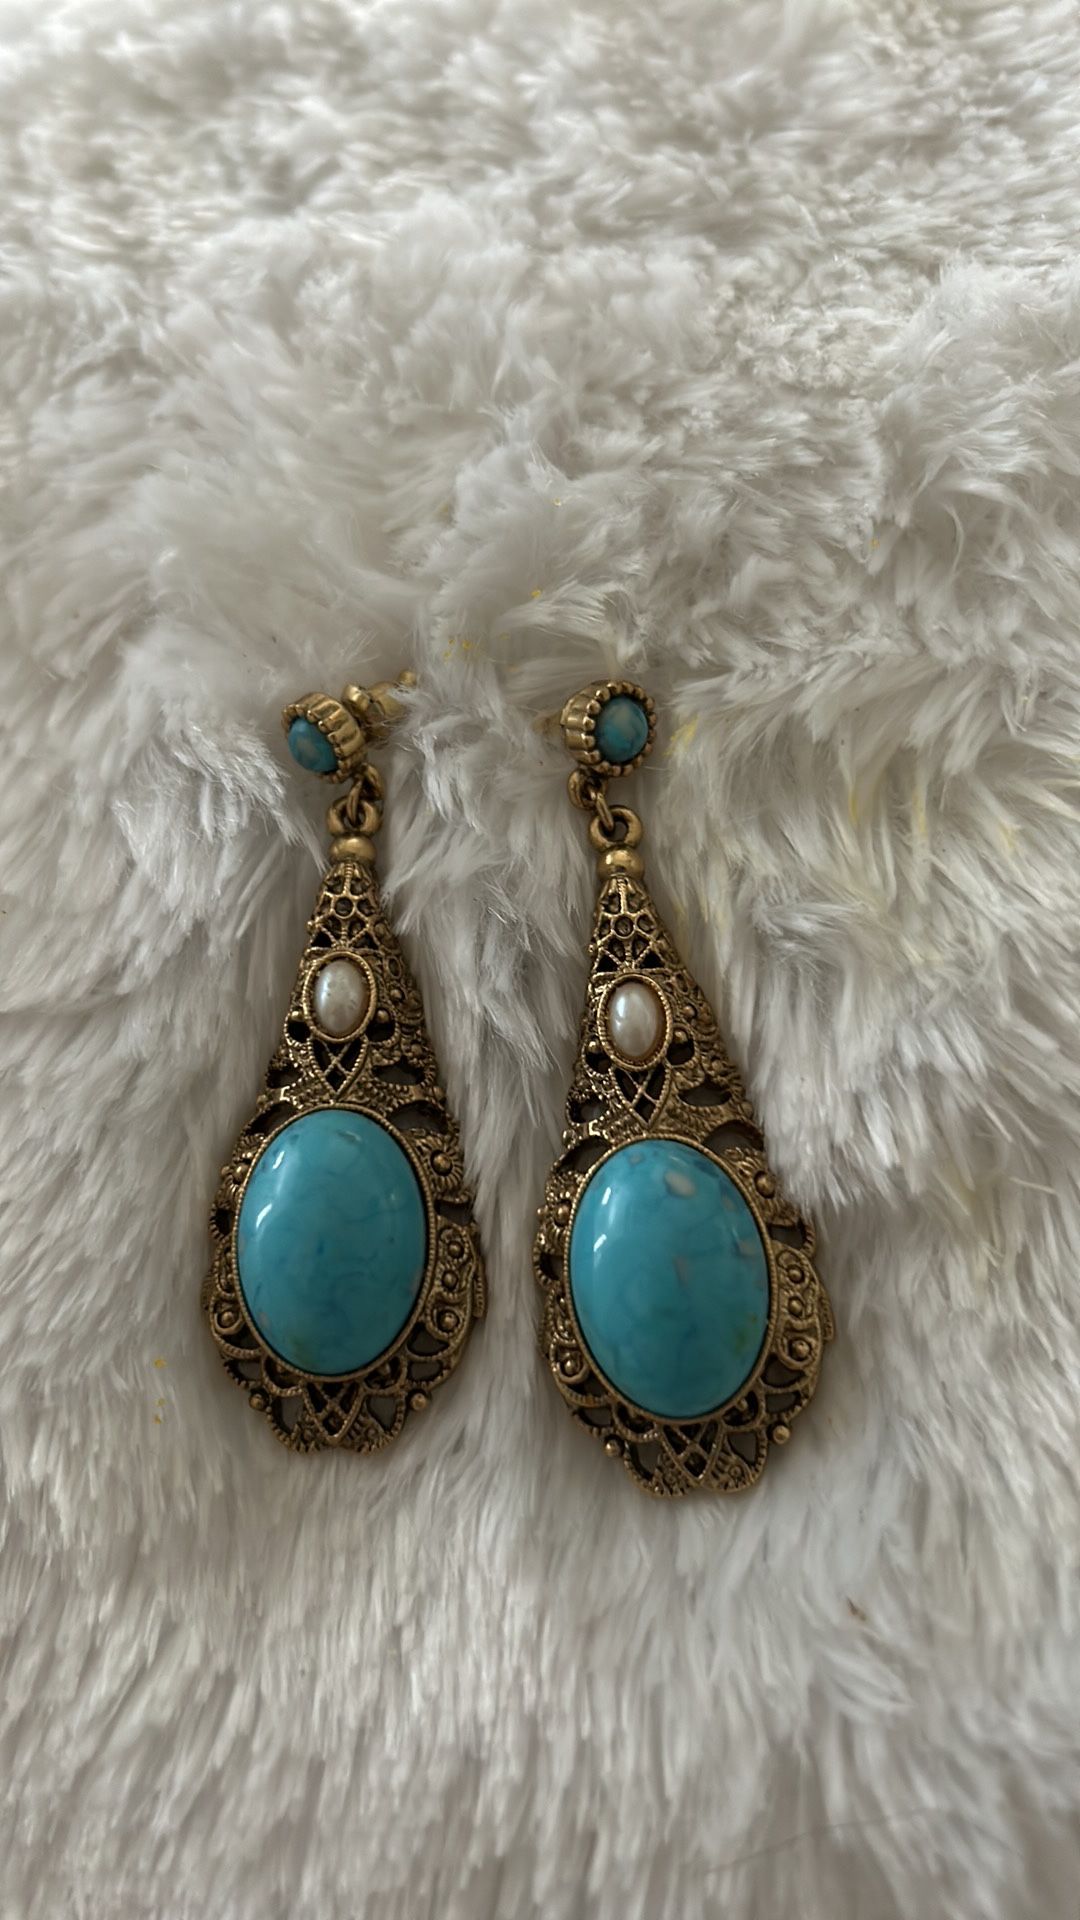 Beautiful costume jewelry earrings